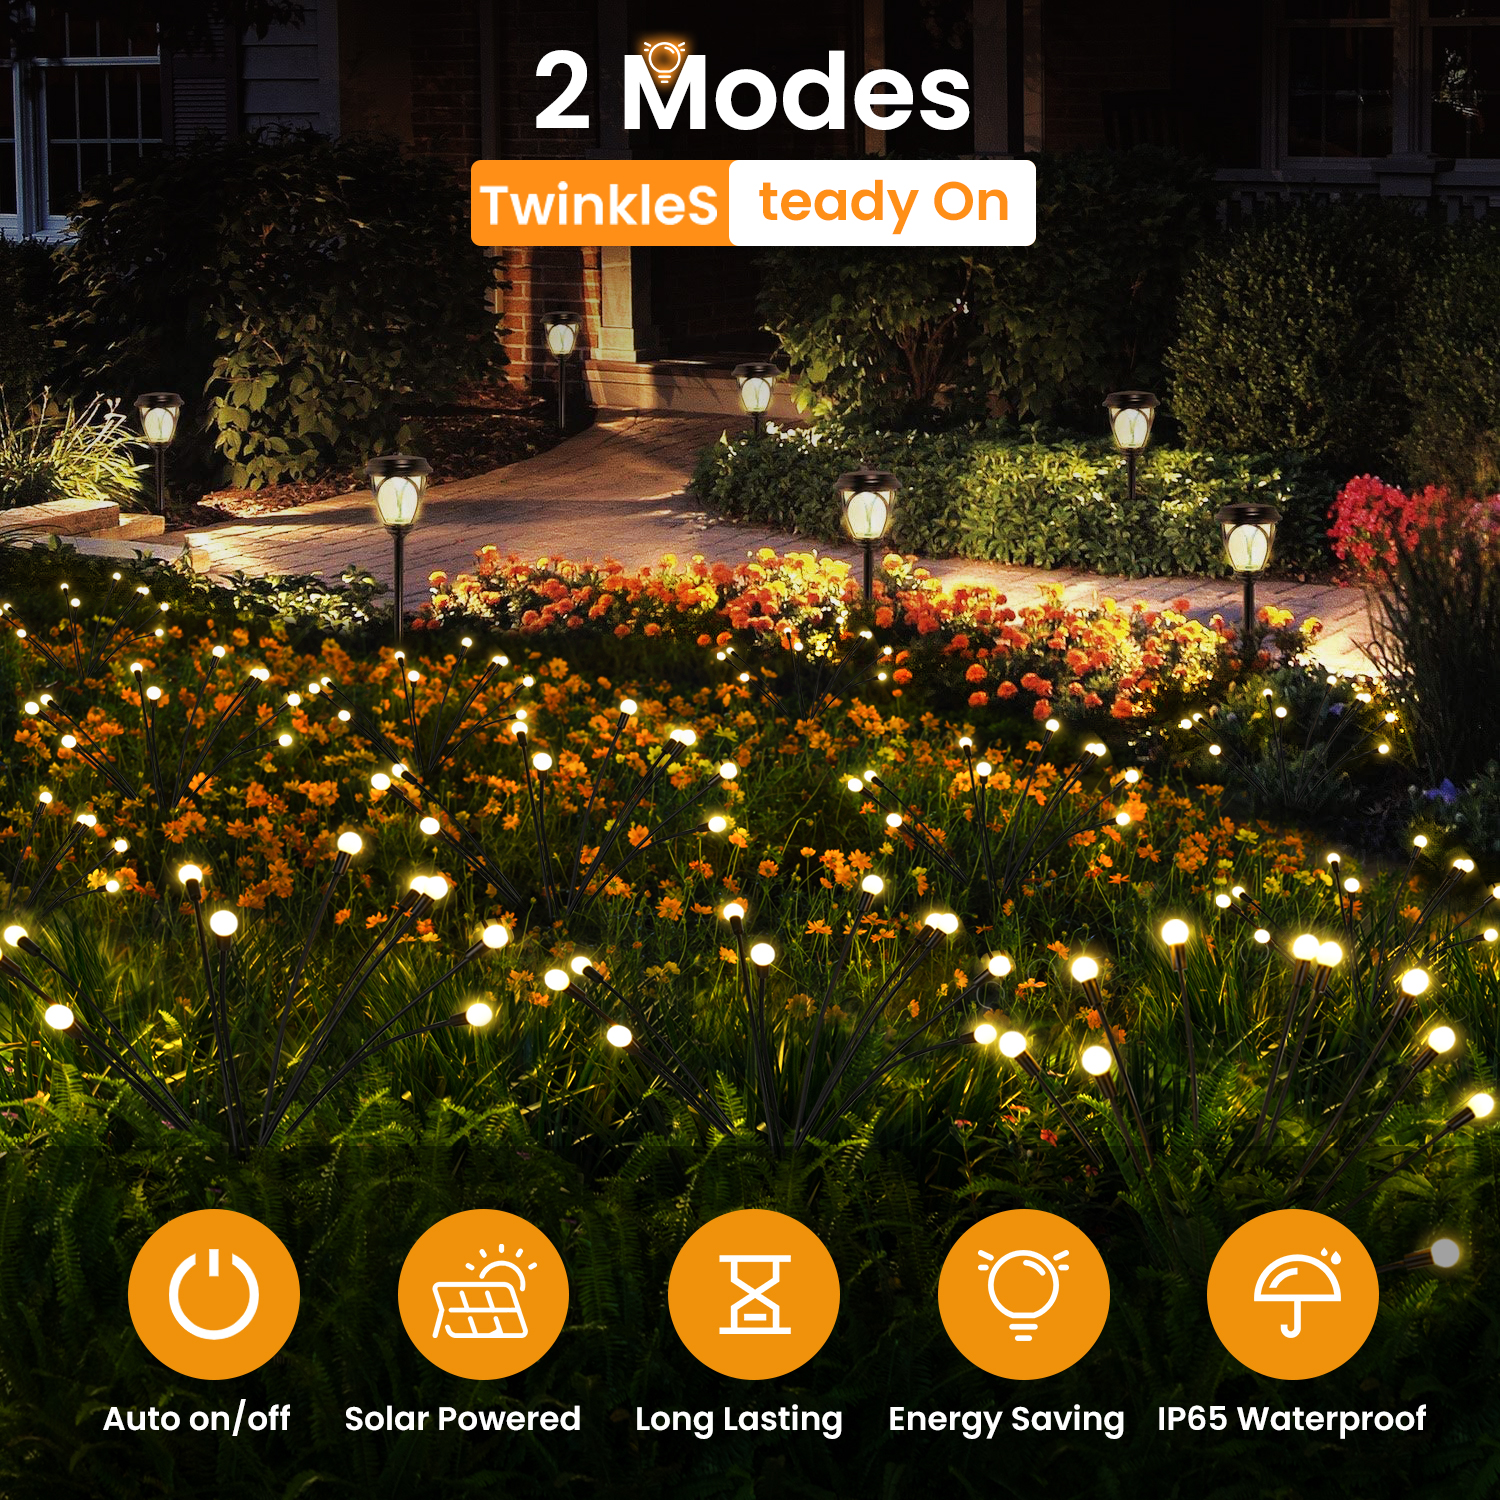 Solar Firefly Lights, Upgraded Pack 12 LED Solar Outdoor Lights,  Waterproof Solar Garden Lights for Outdoor